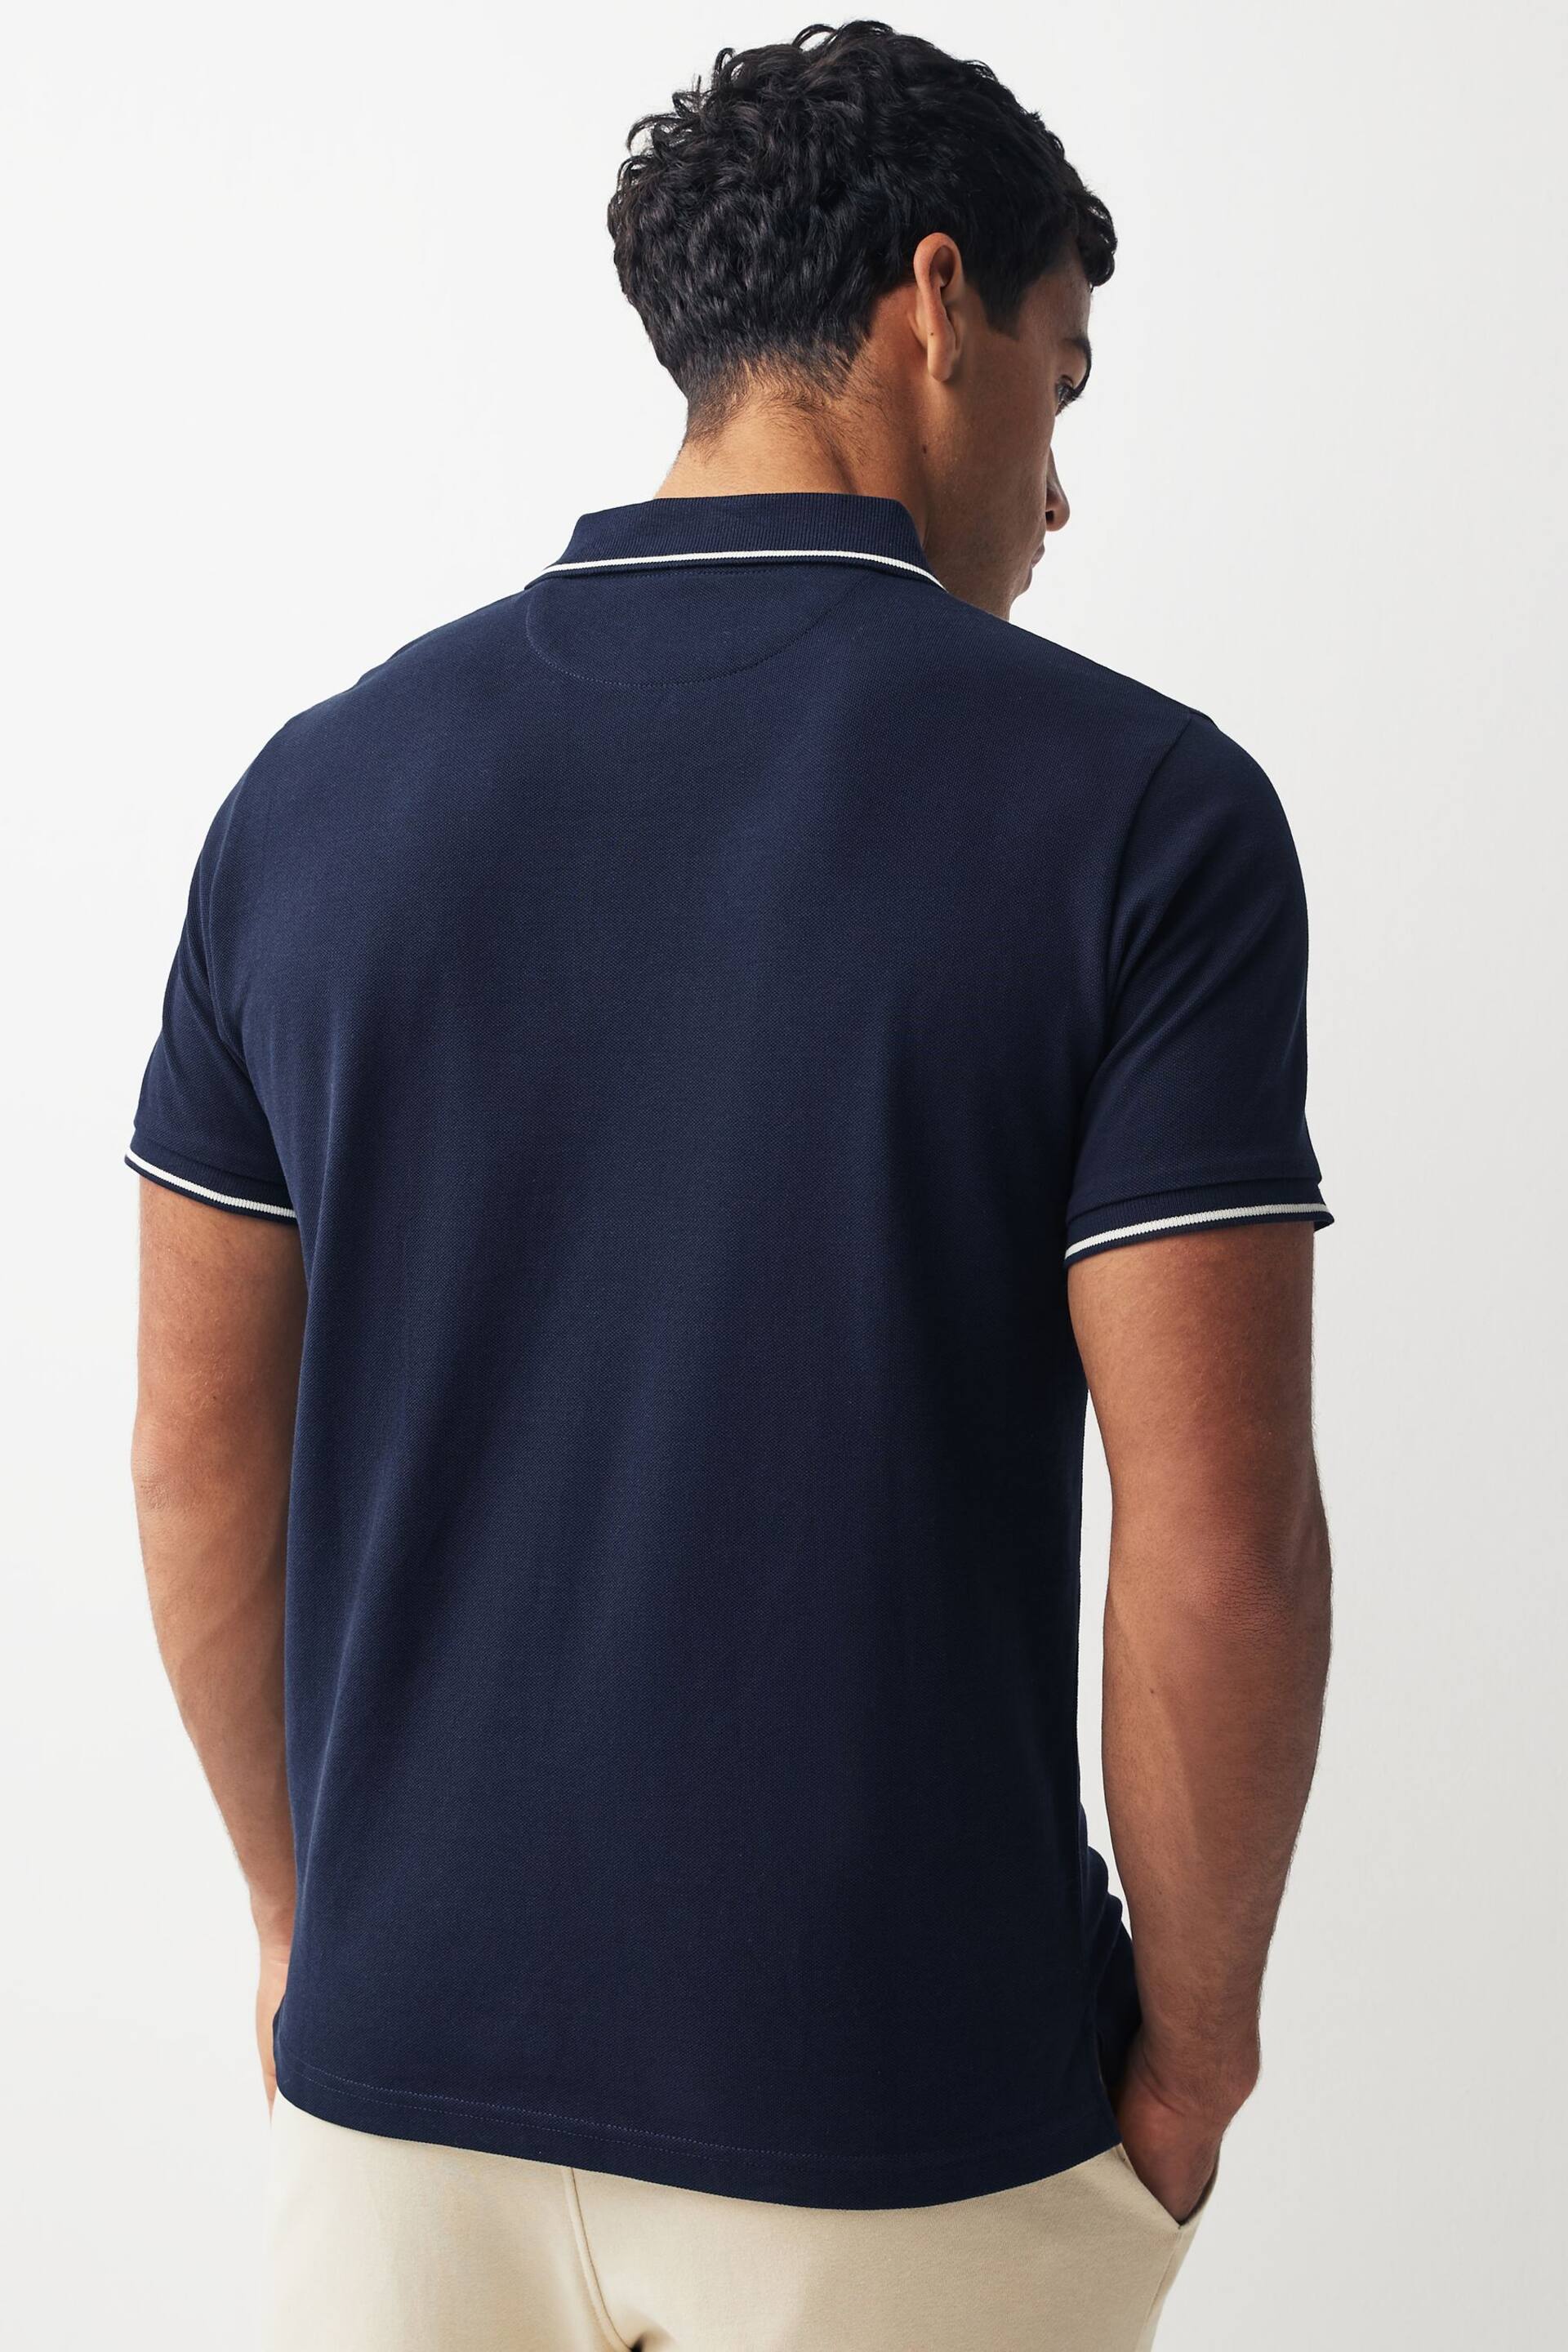 GANT Blue Tipped Piqué Polo Shirt - Image 2 of 4